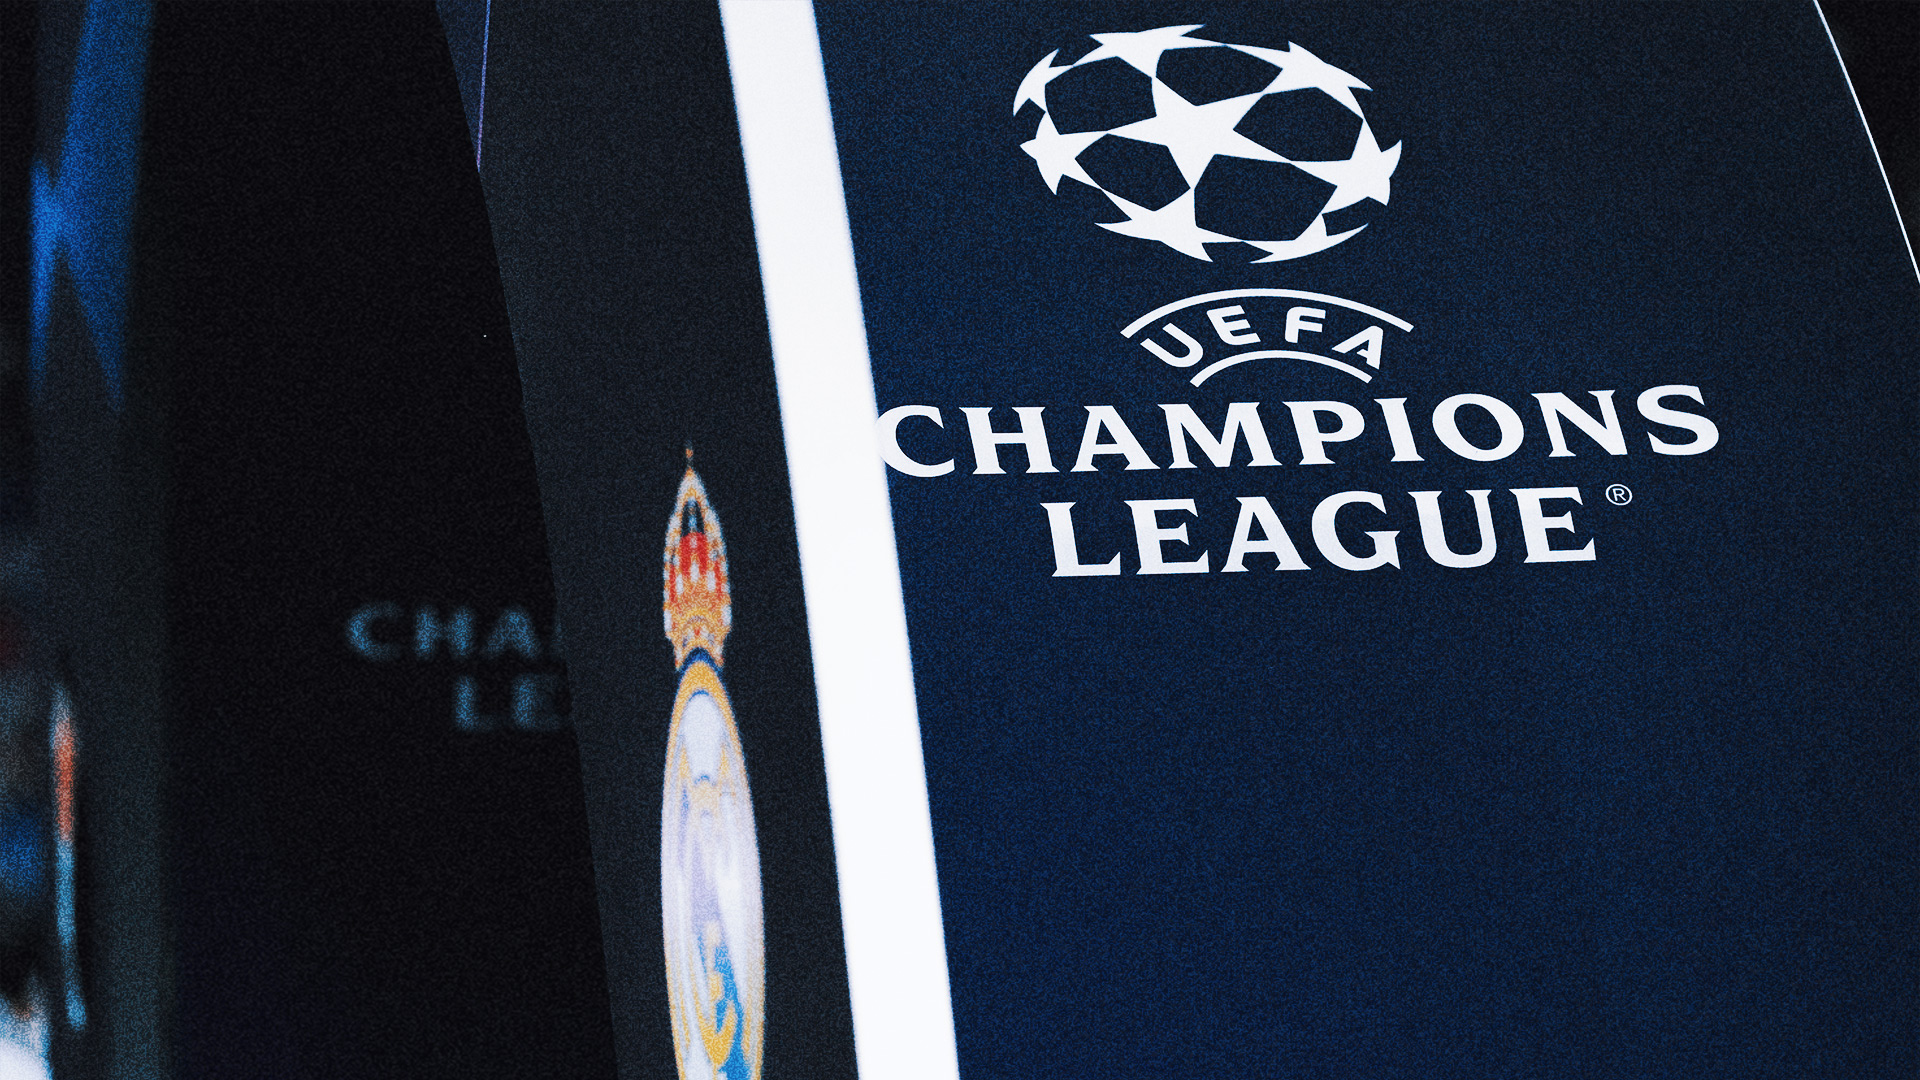 Spanish FA asks UEFA for suspension amid calls for Luis Rubiales' resignation